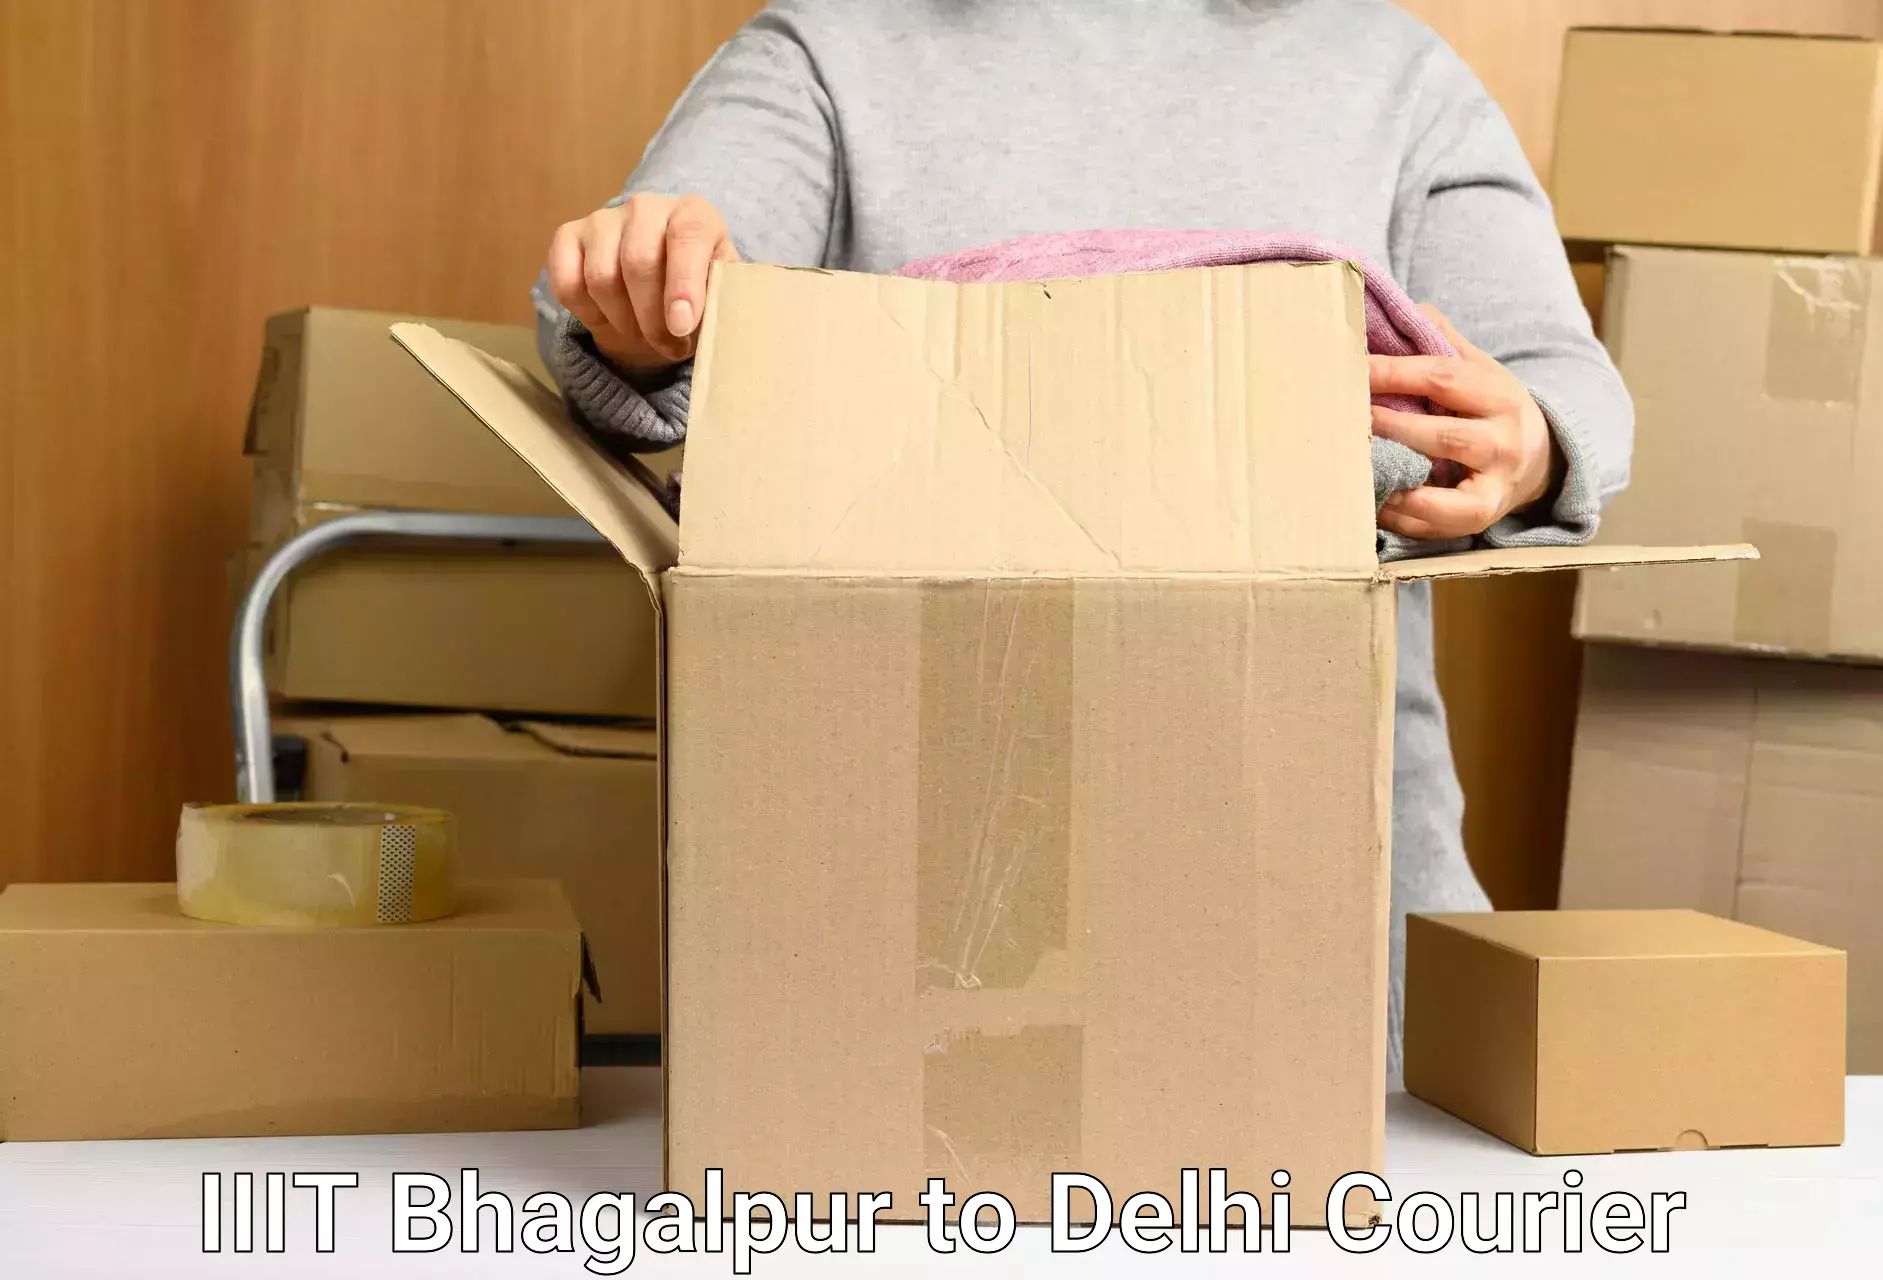 International parcel service in IIIT Bhagalpur to NCR